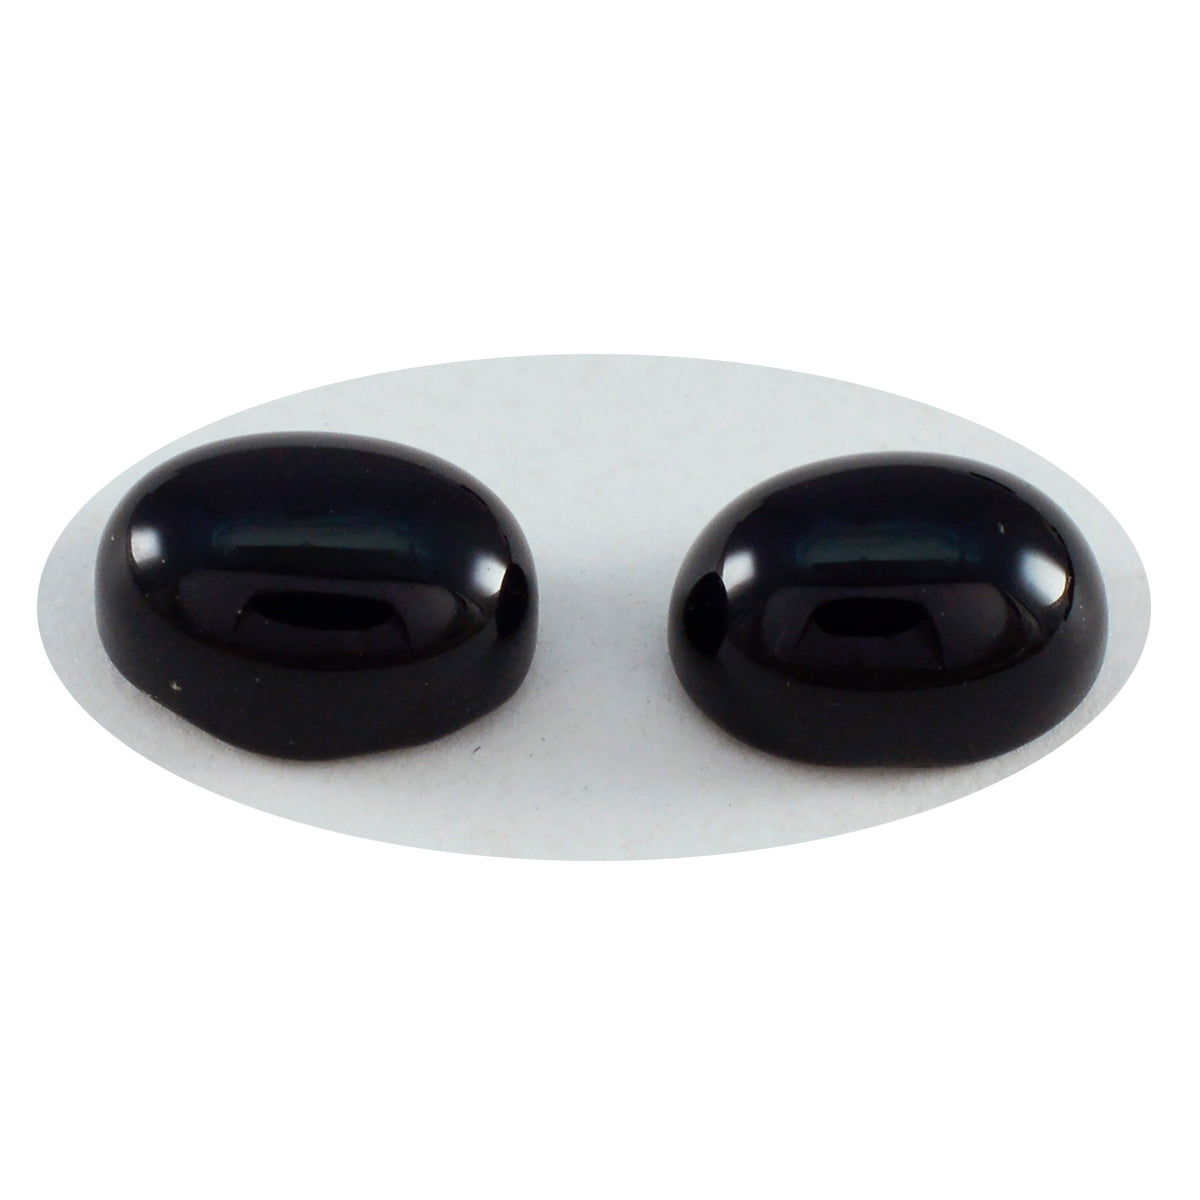 riyogems 1 st svart onyx cabochon 7x9 mm oval form häpnadsväckande kvalitet lösa ädelstenar